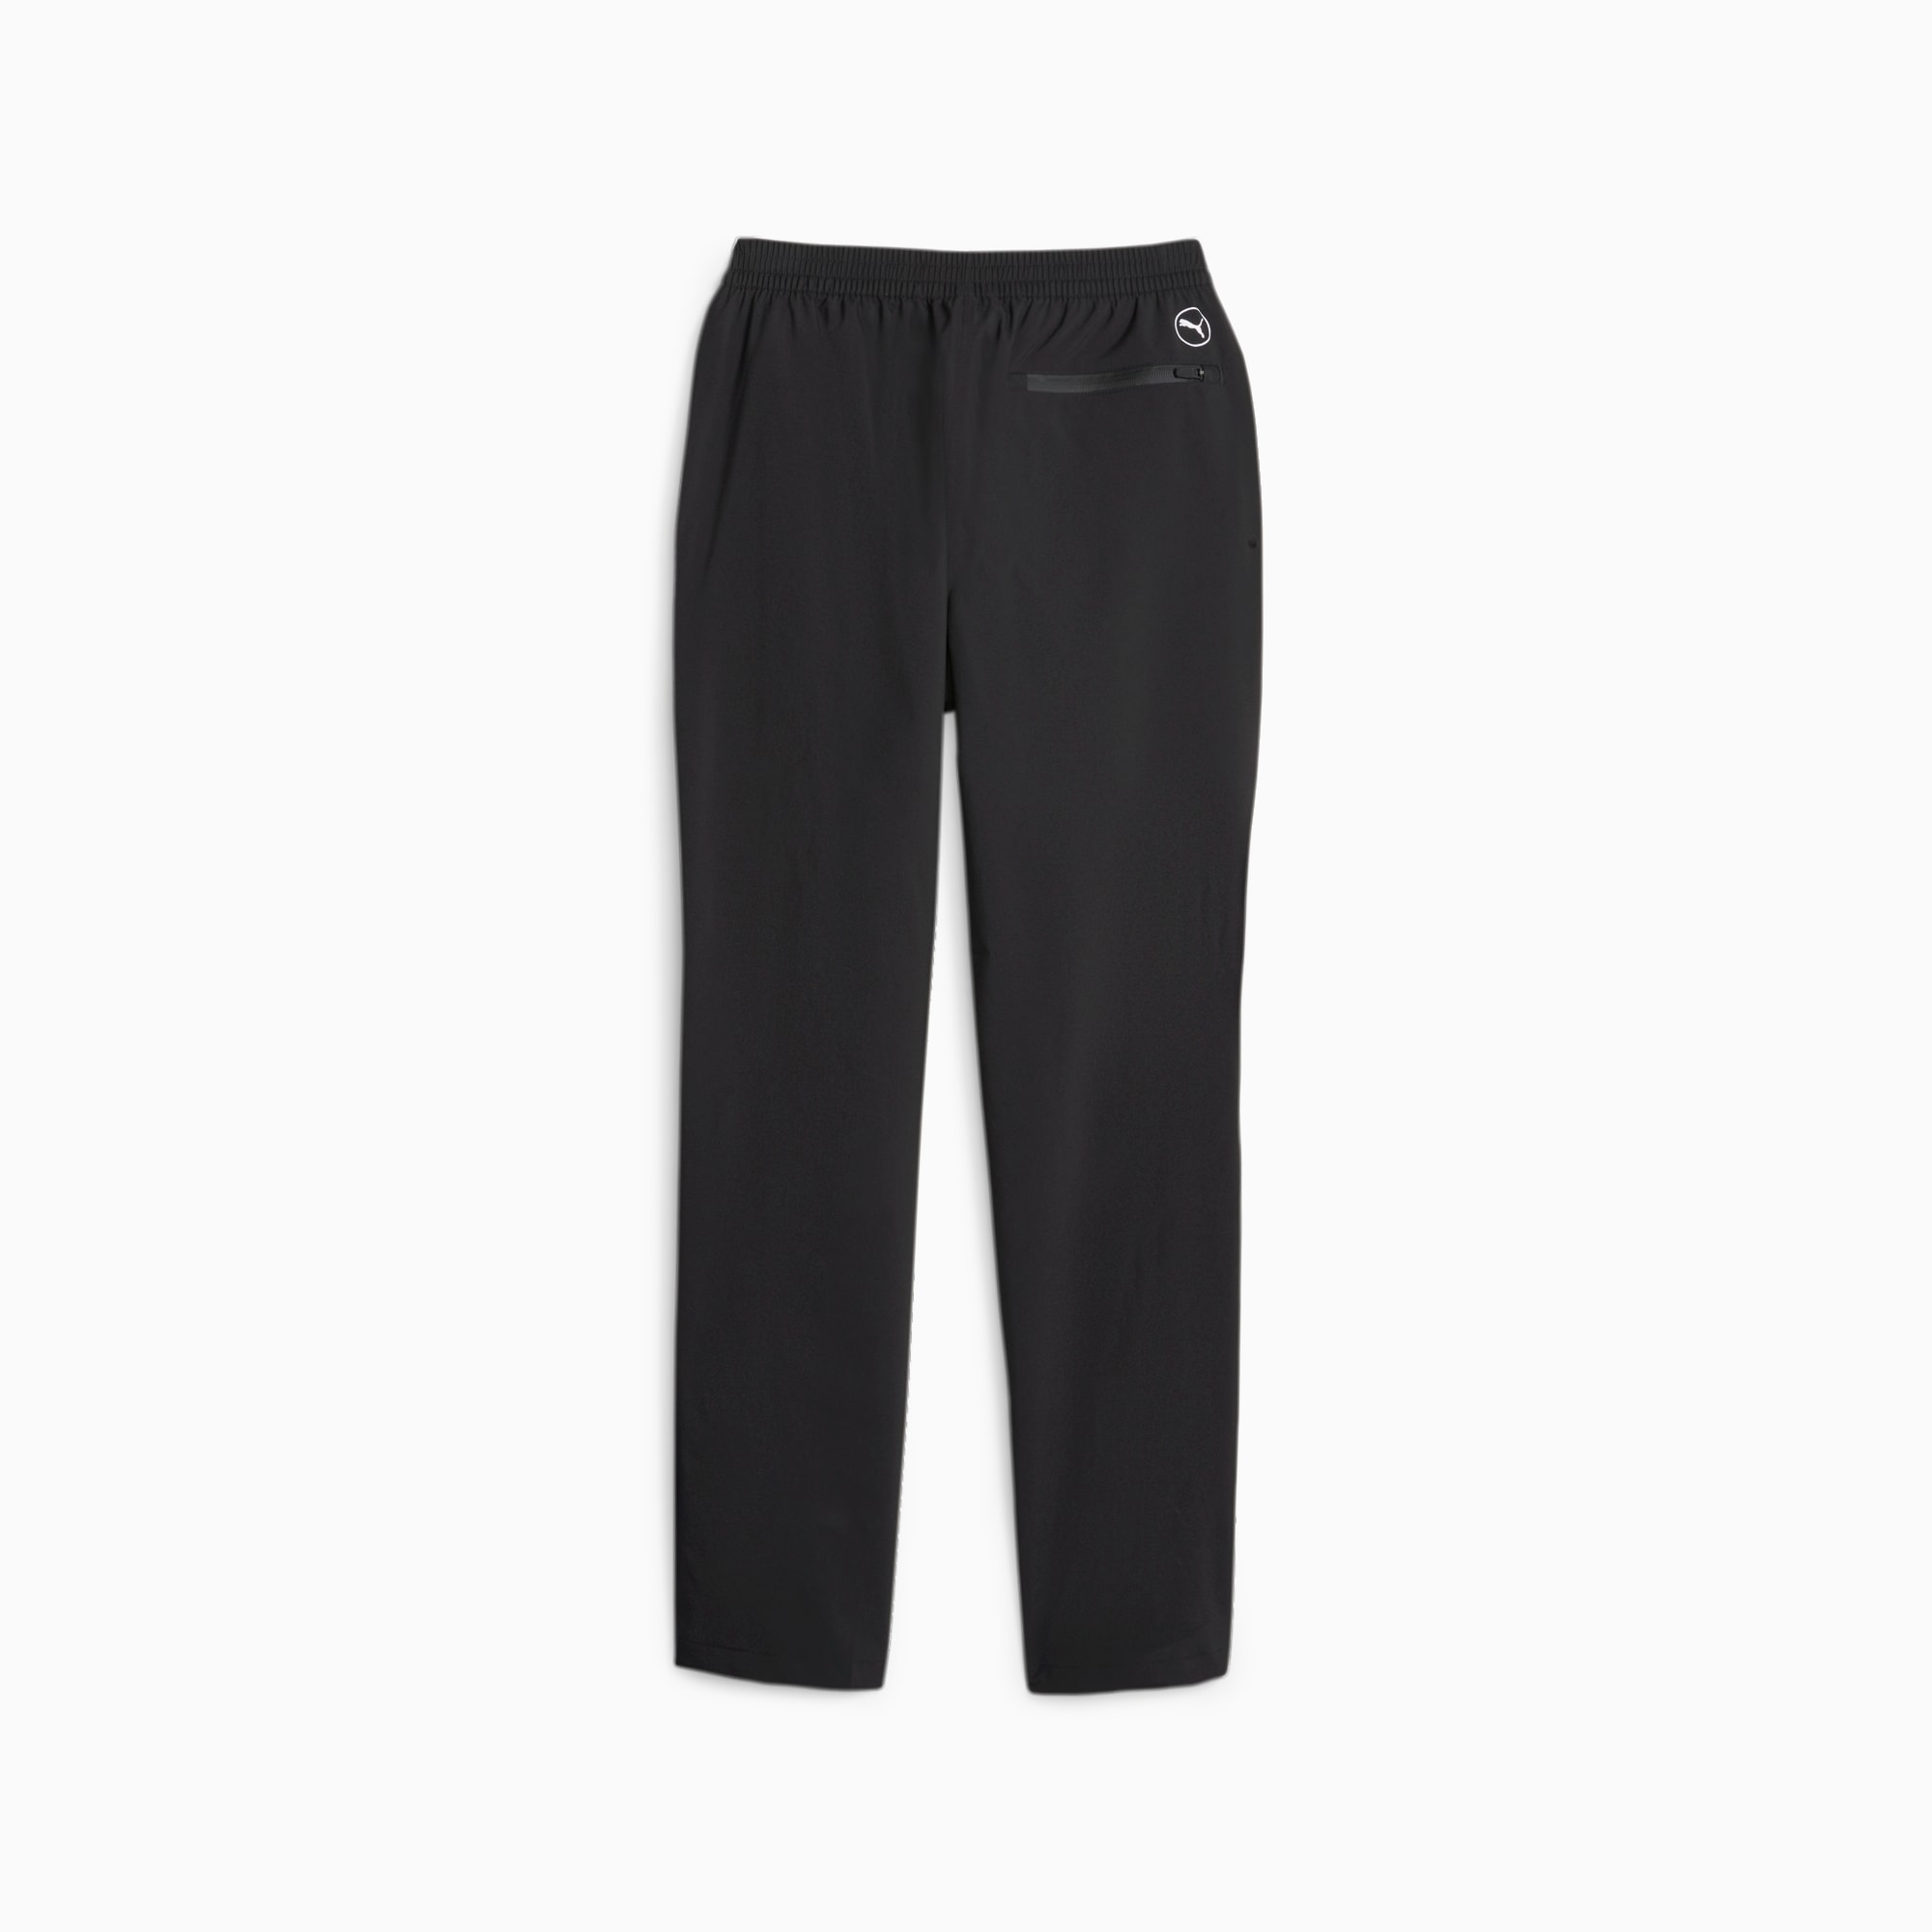 PUMA Drylbl Men's Rain Pants, Black, Size XL/L, Clothing